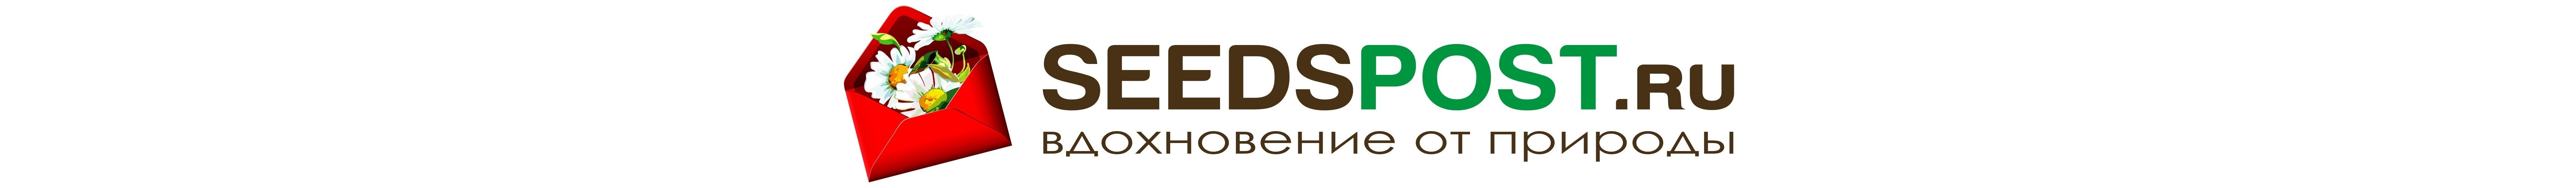 SEEDSPOST.ru